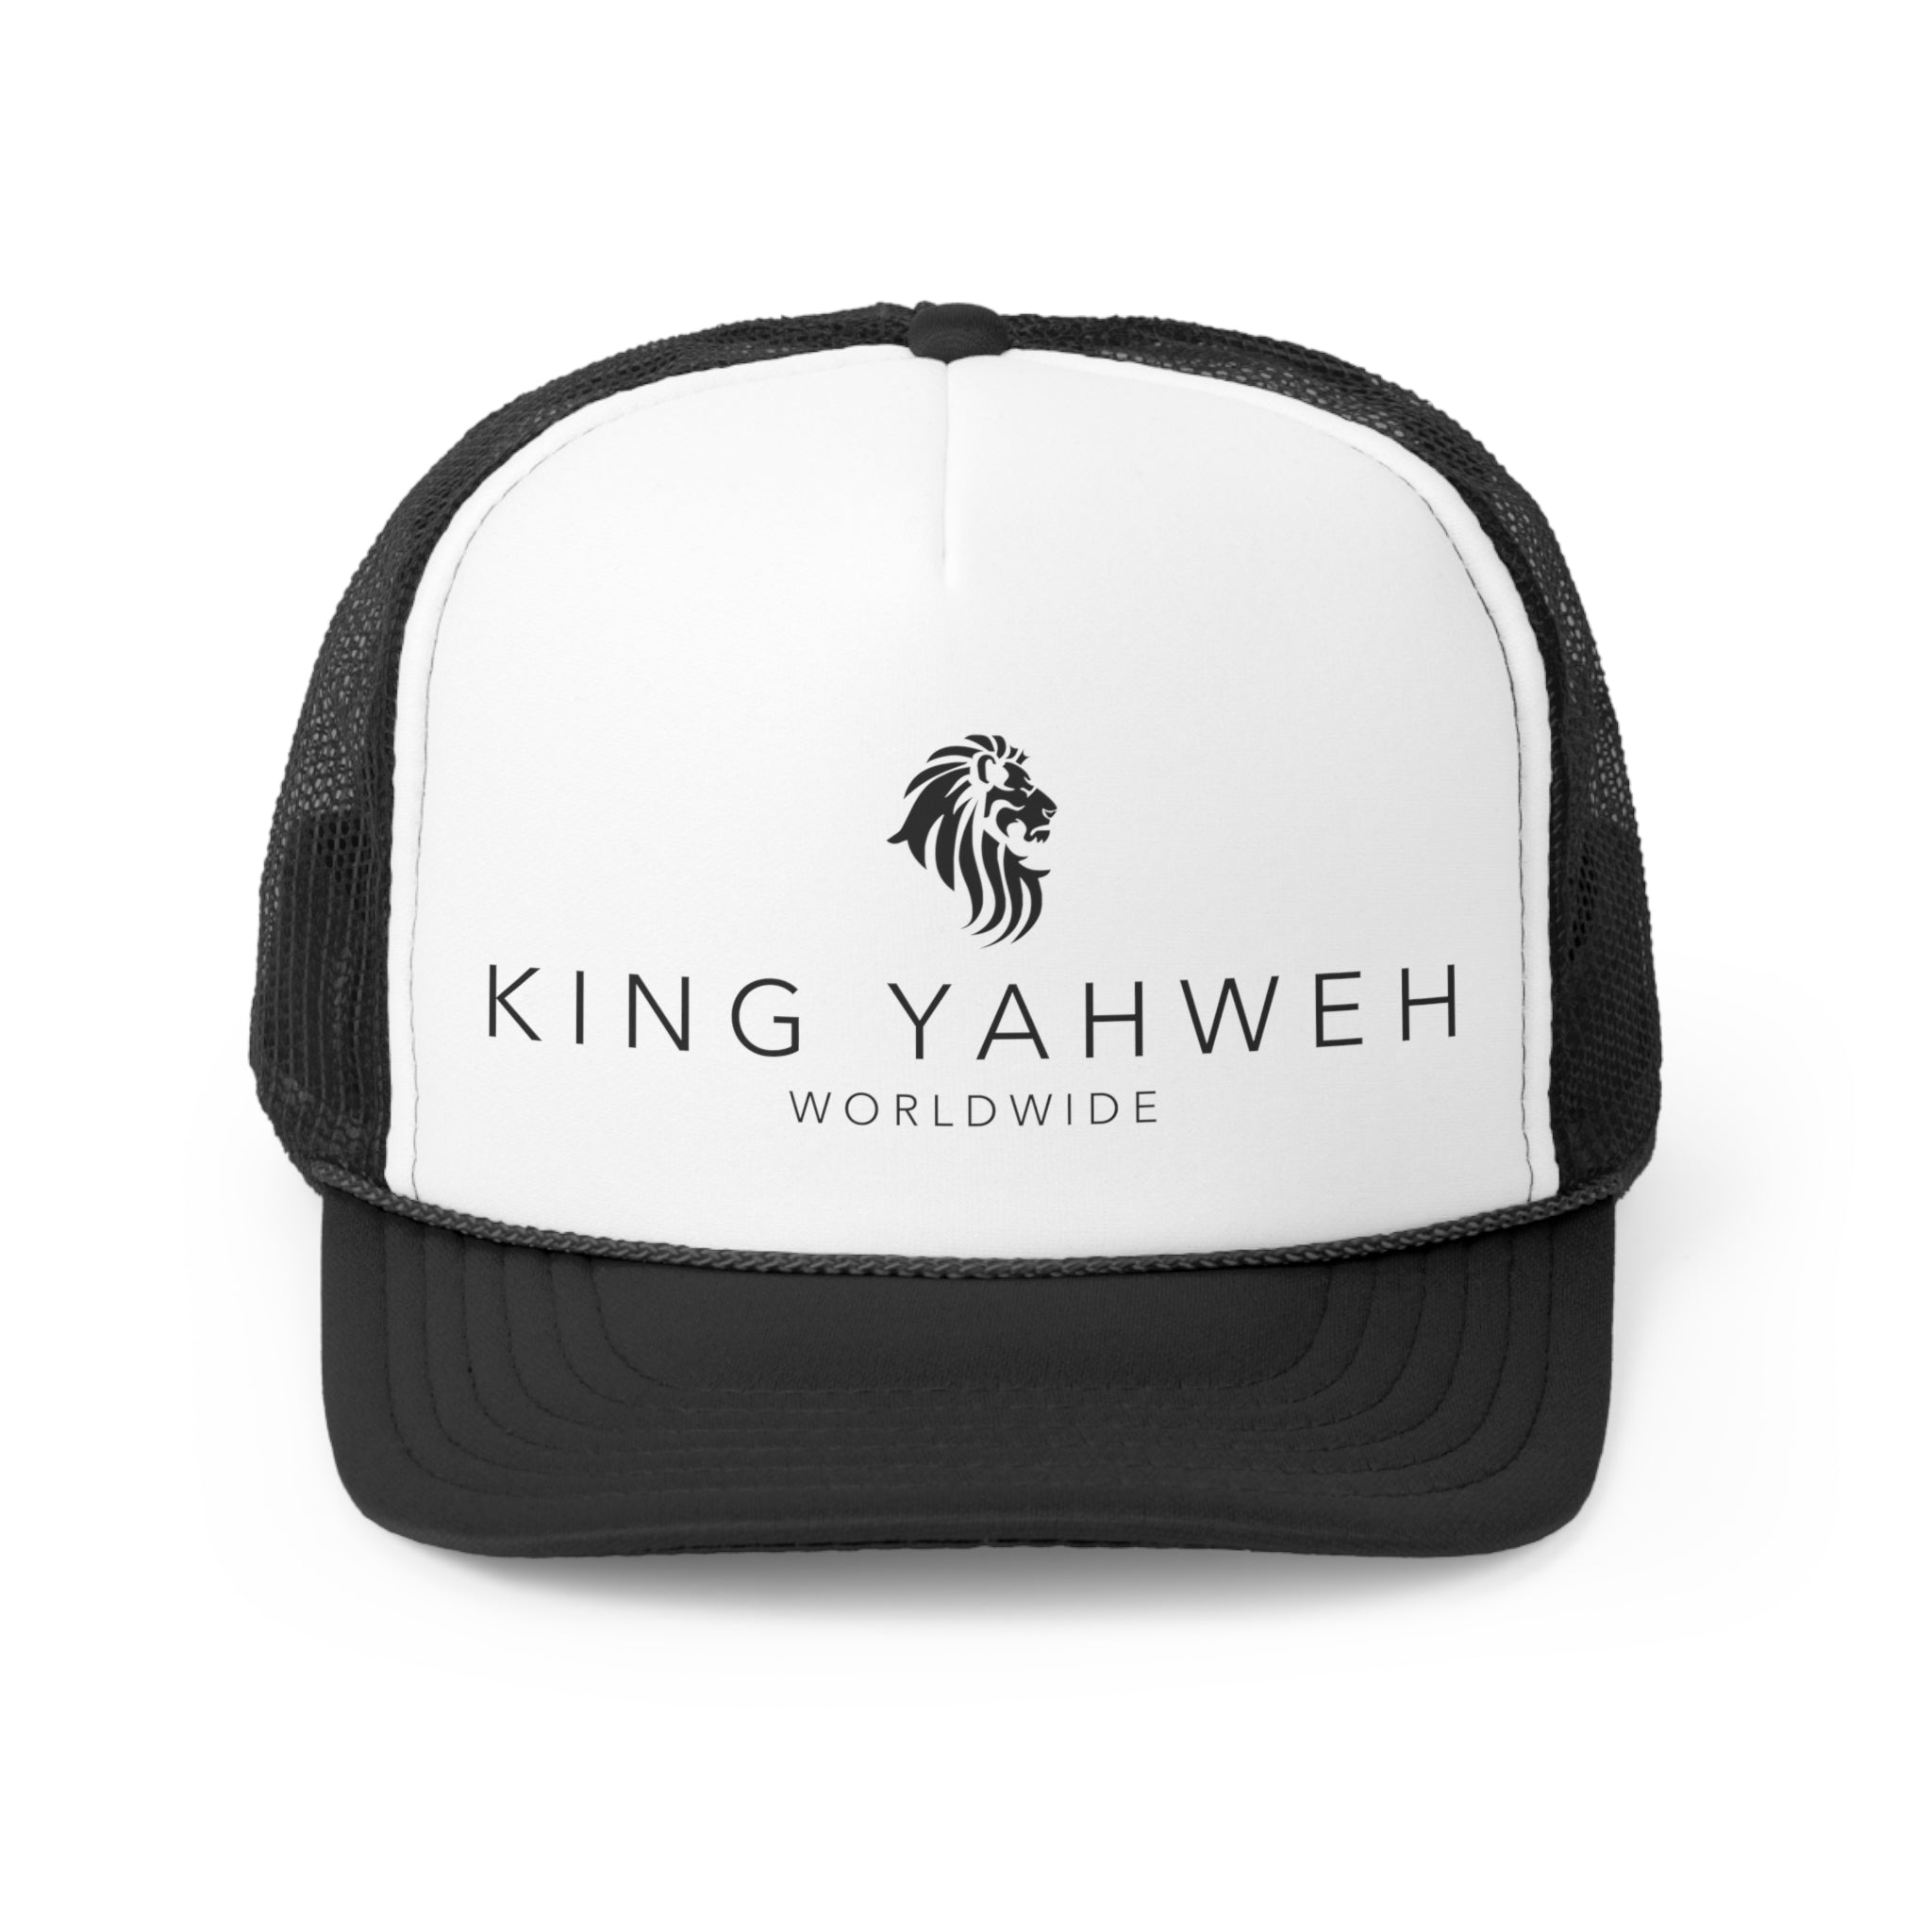 King YAHWEH (Worldwide) Trucker Cap